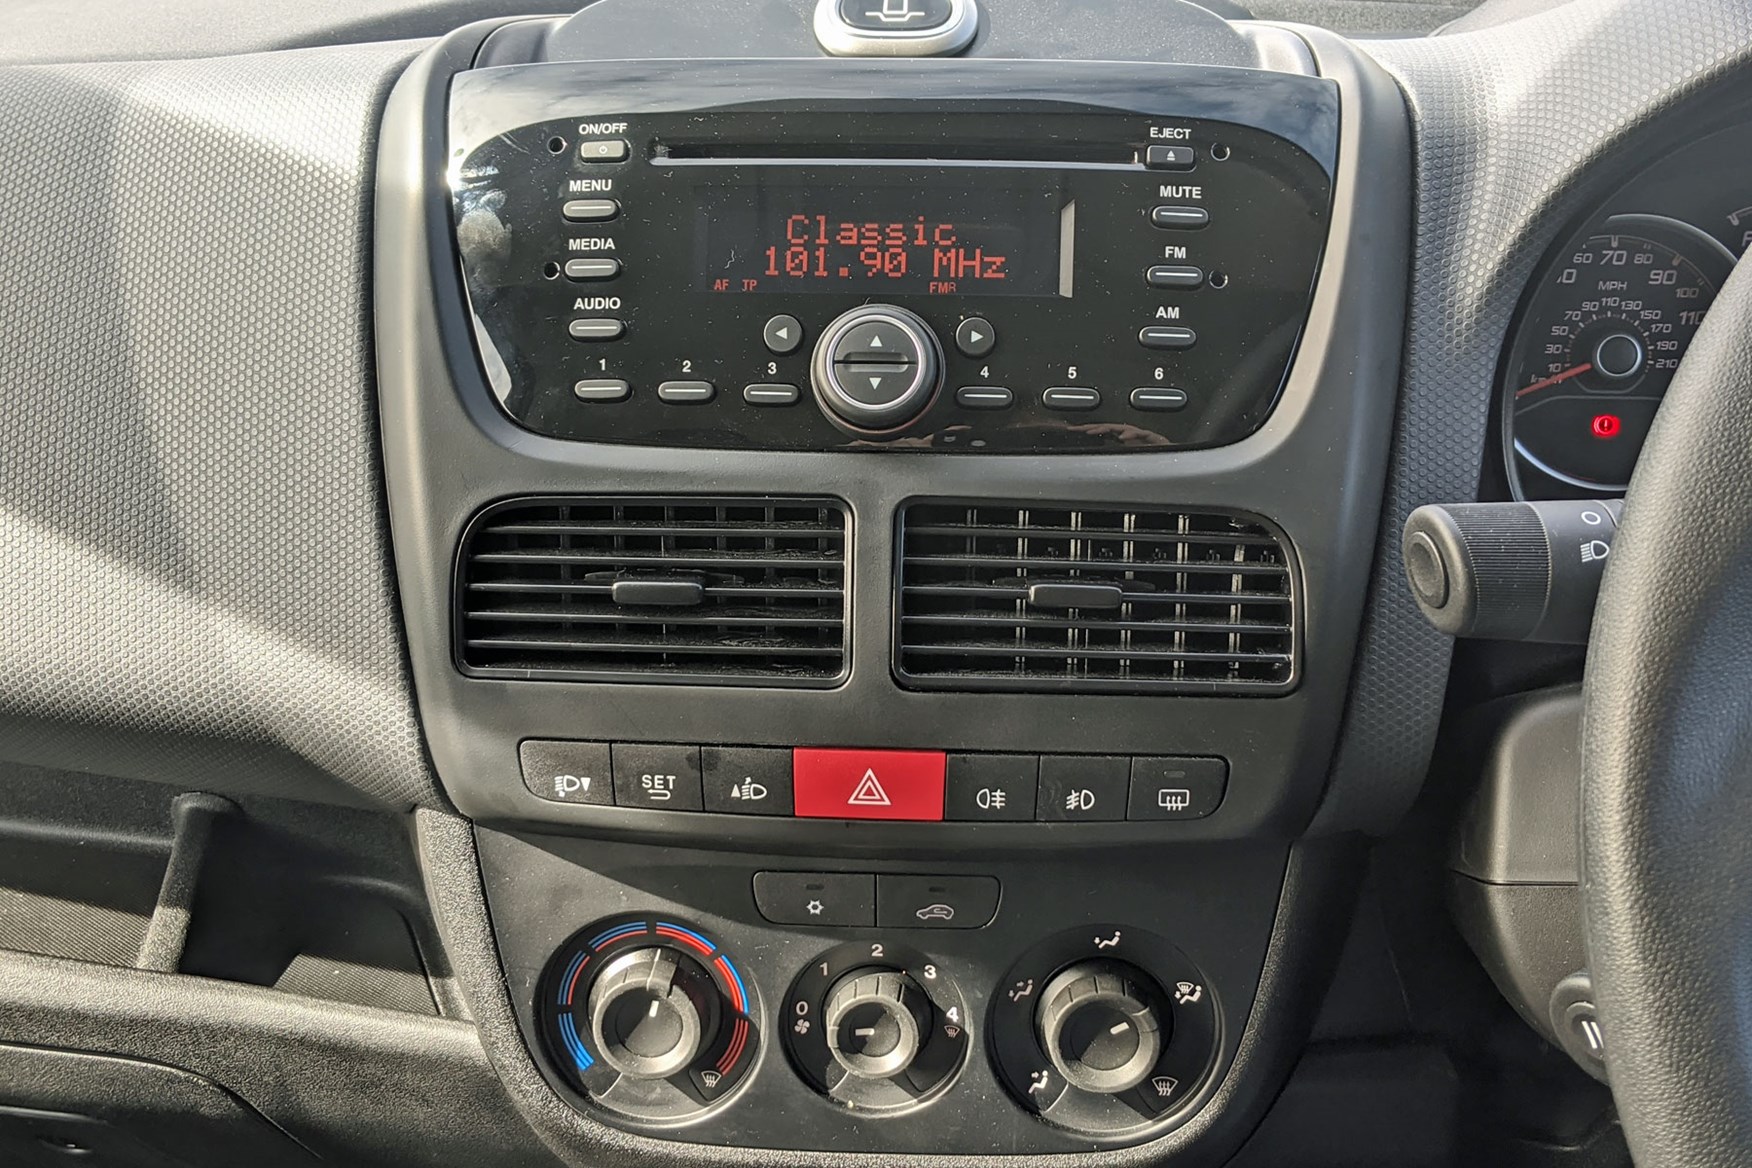 Fiat Doblo review - centre console